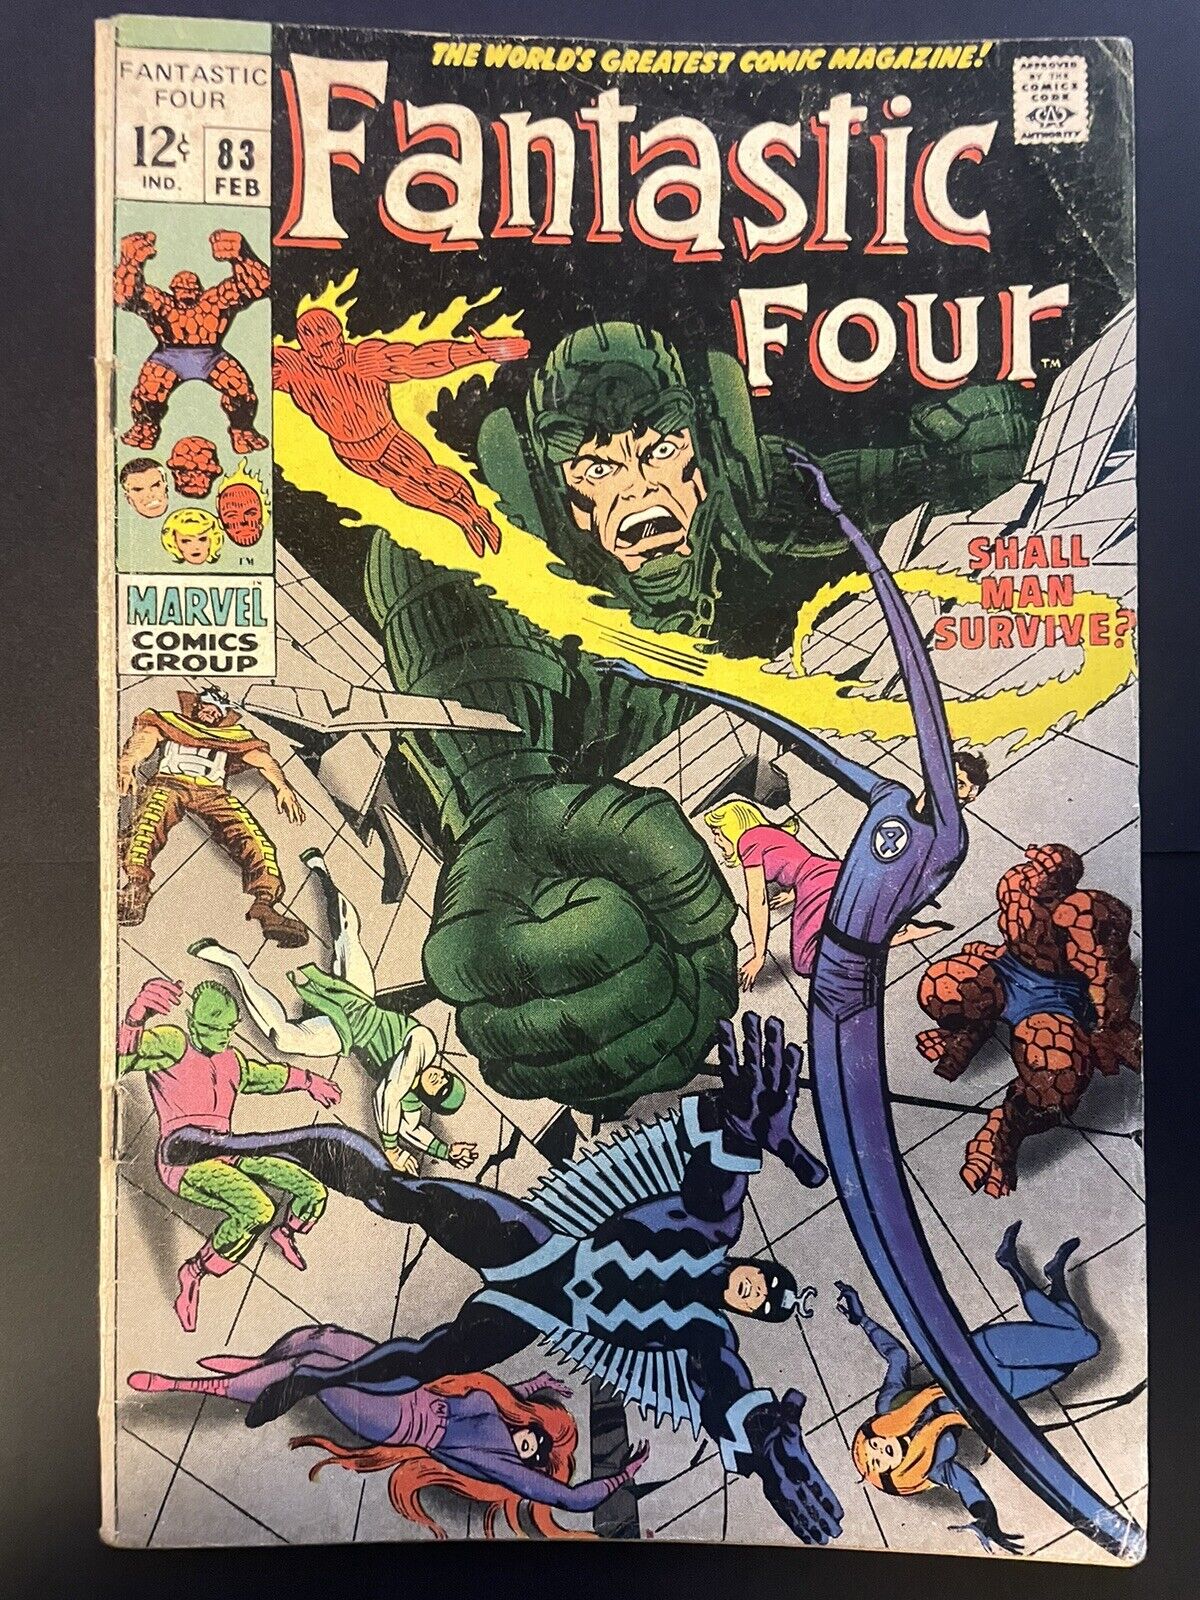 Fantastic Four #83 (1969)